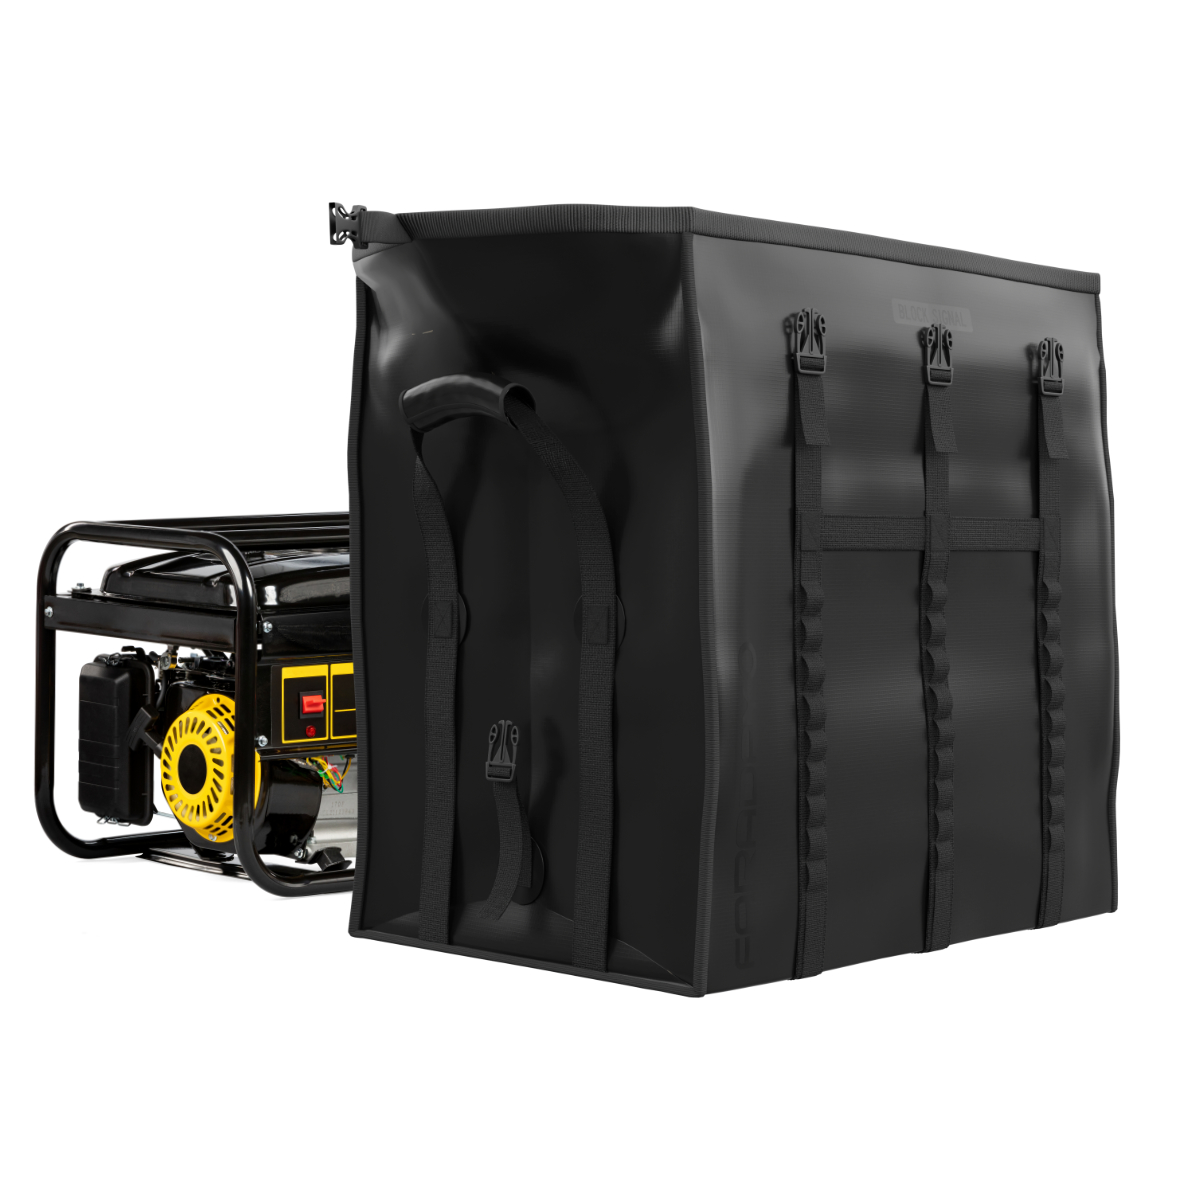 Faraday Generator Dry Bag – Practical Disaster Preparedness for the Family